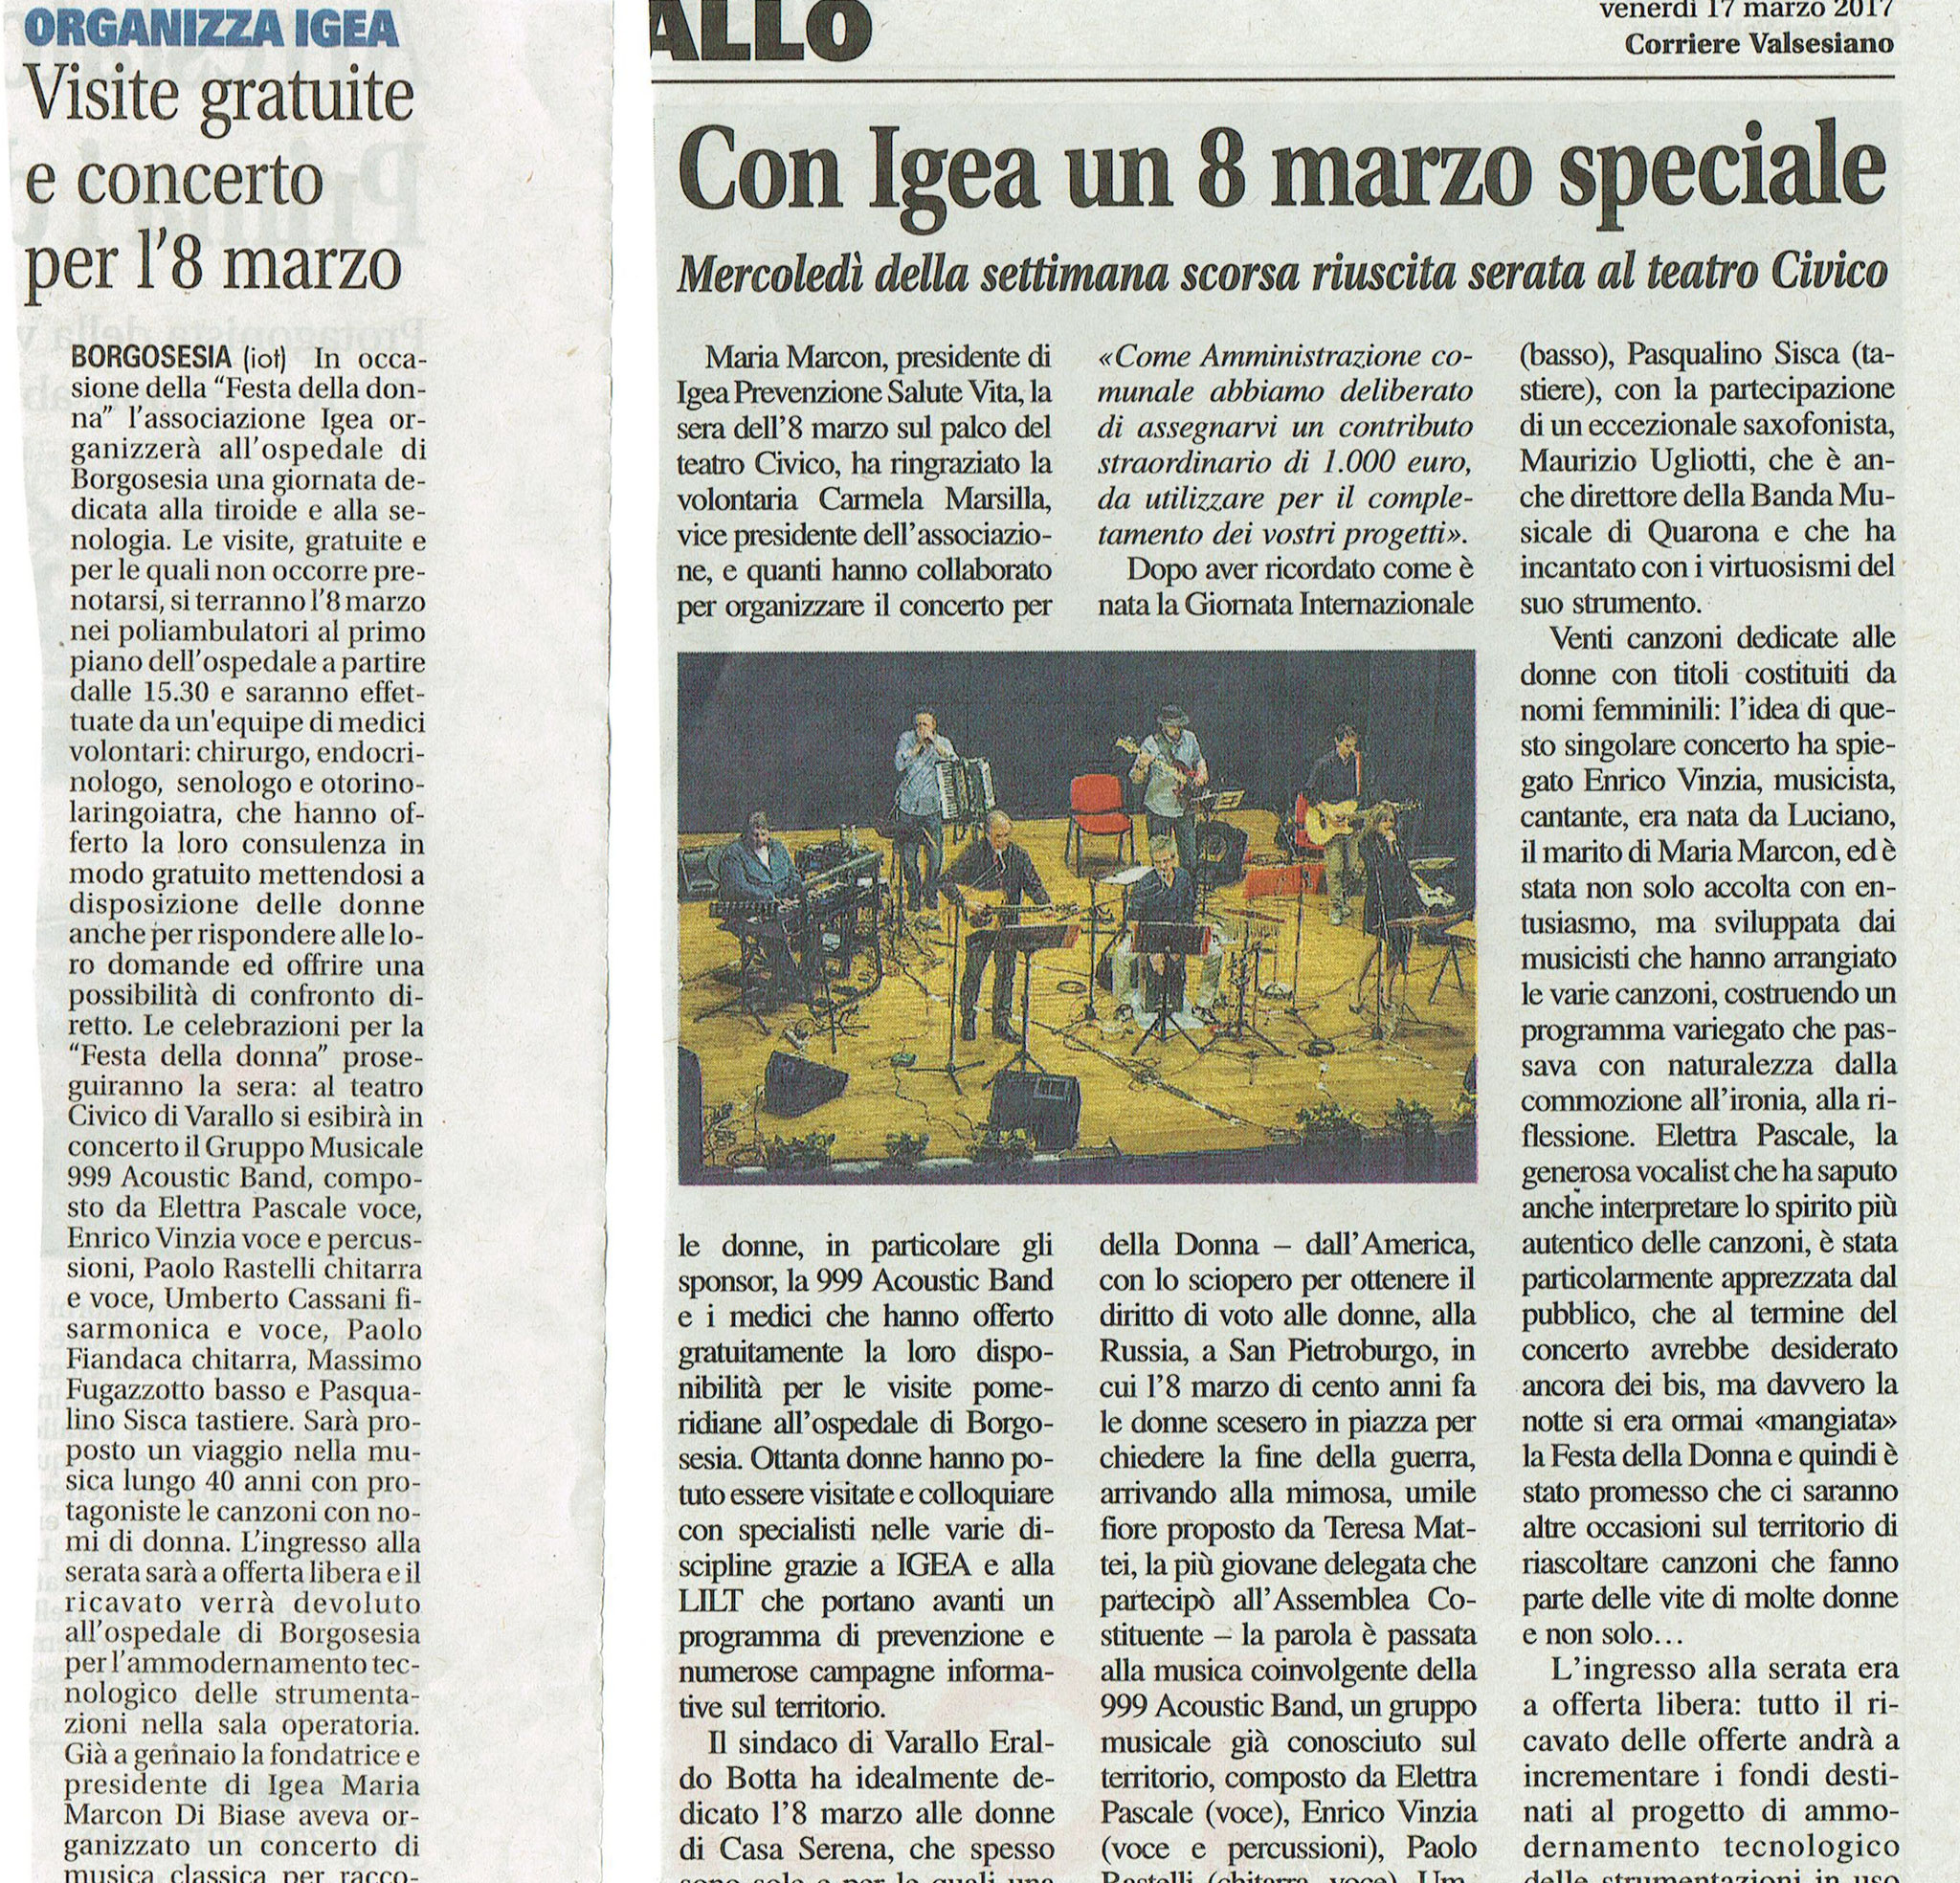 Corriere Valsesiano, 17/03/17